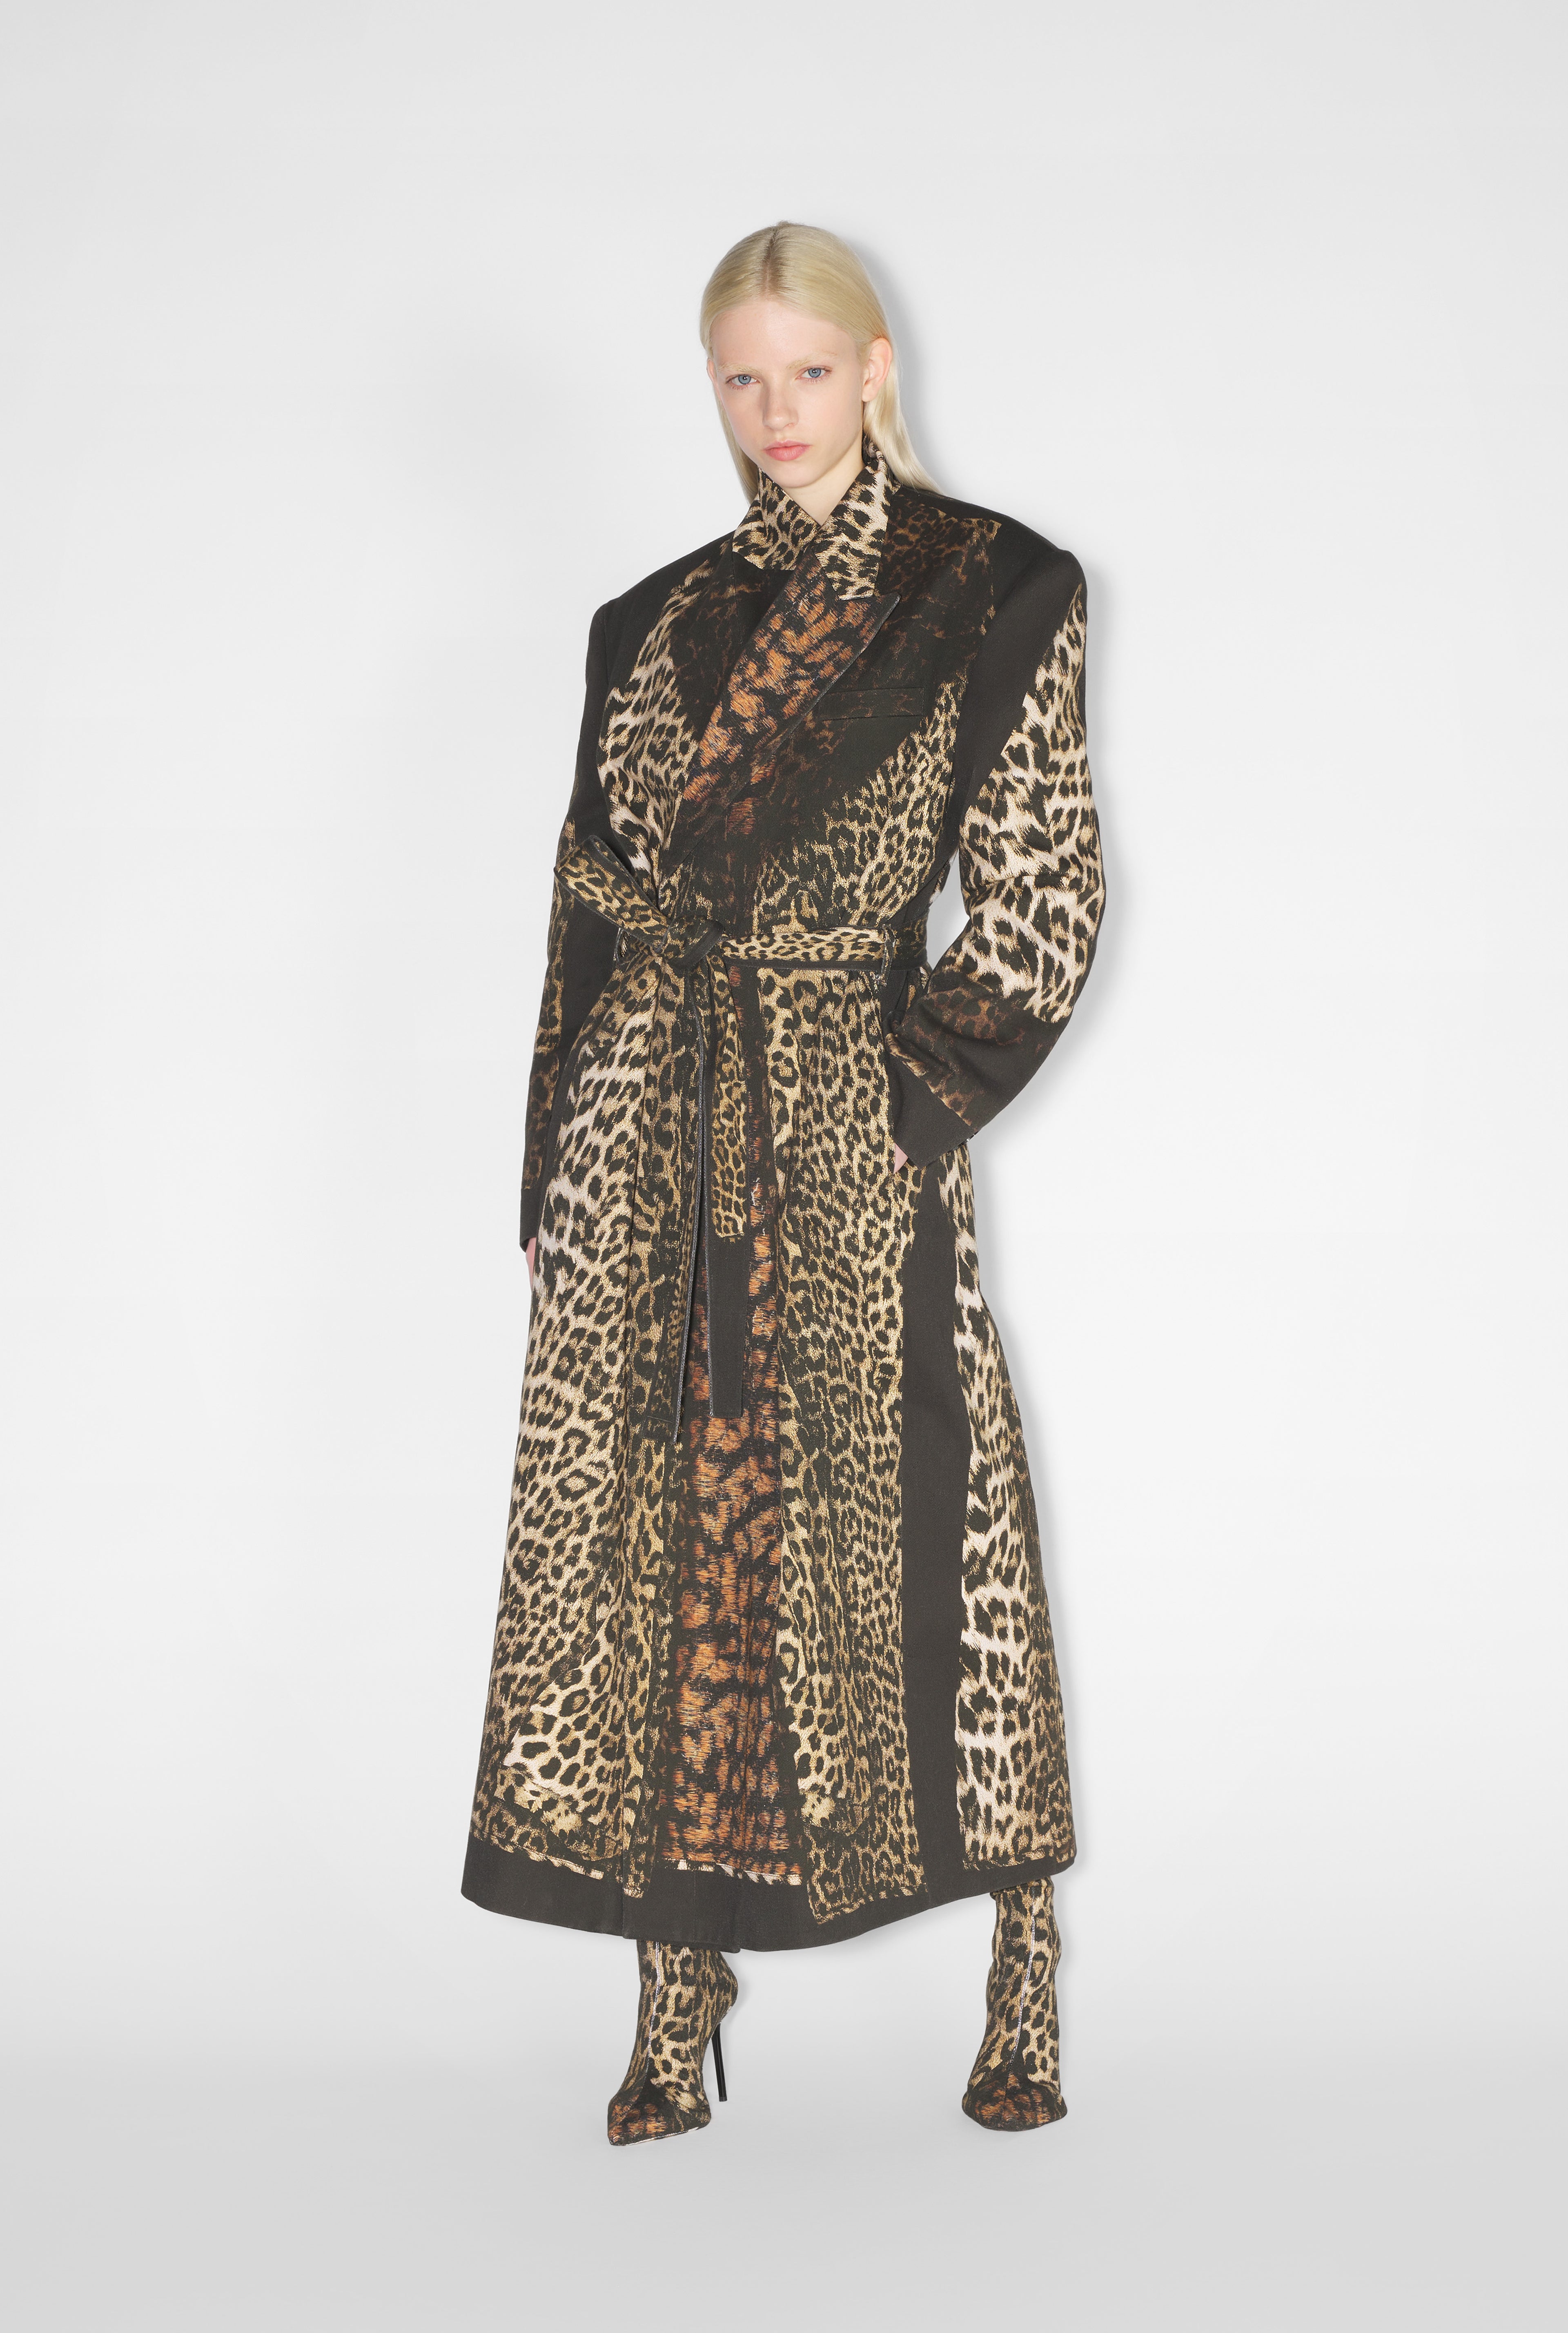 The Leopard Coat